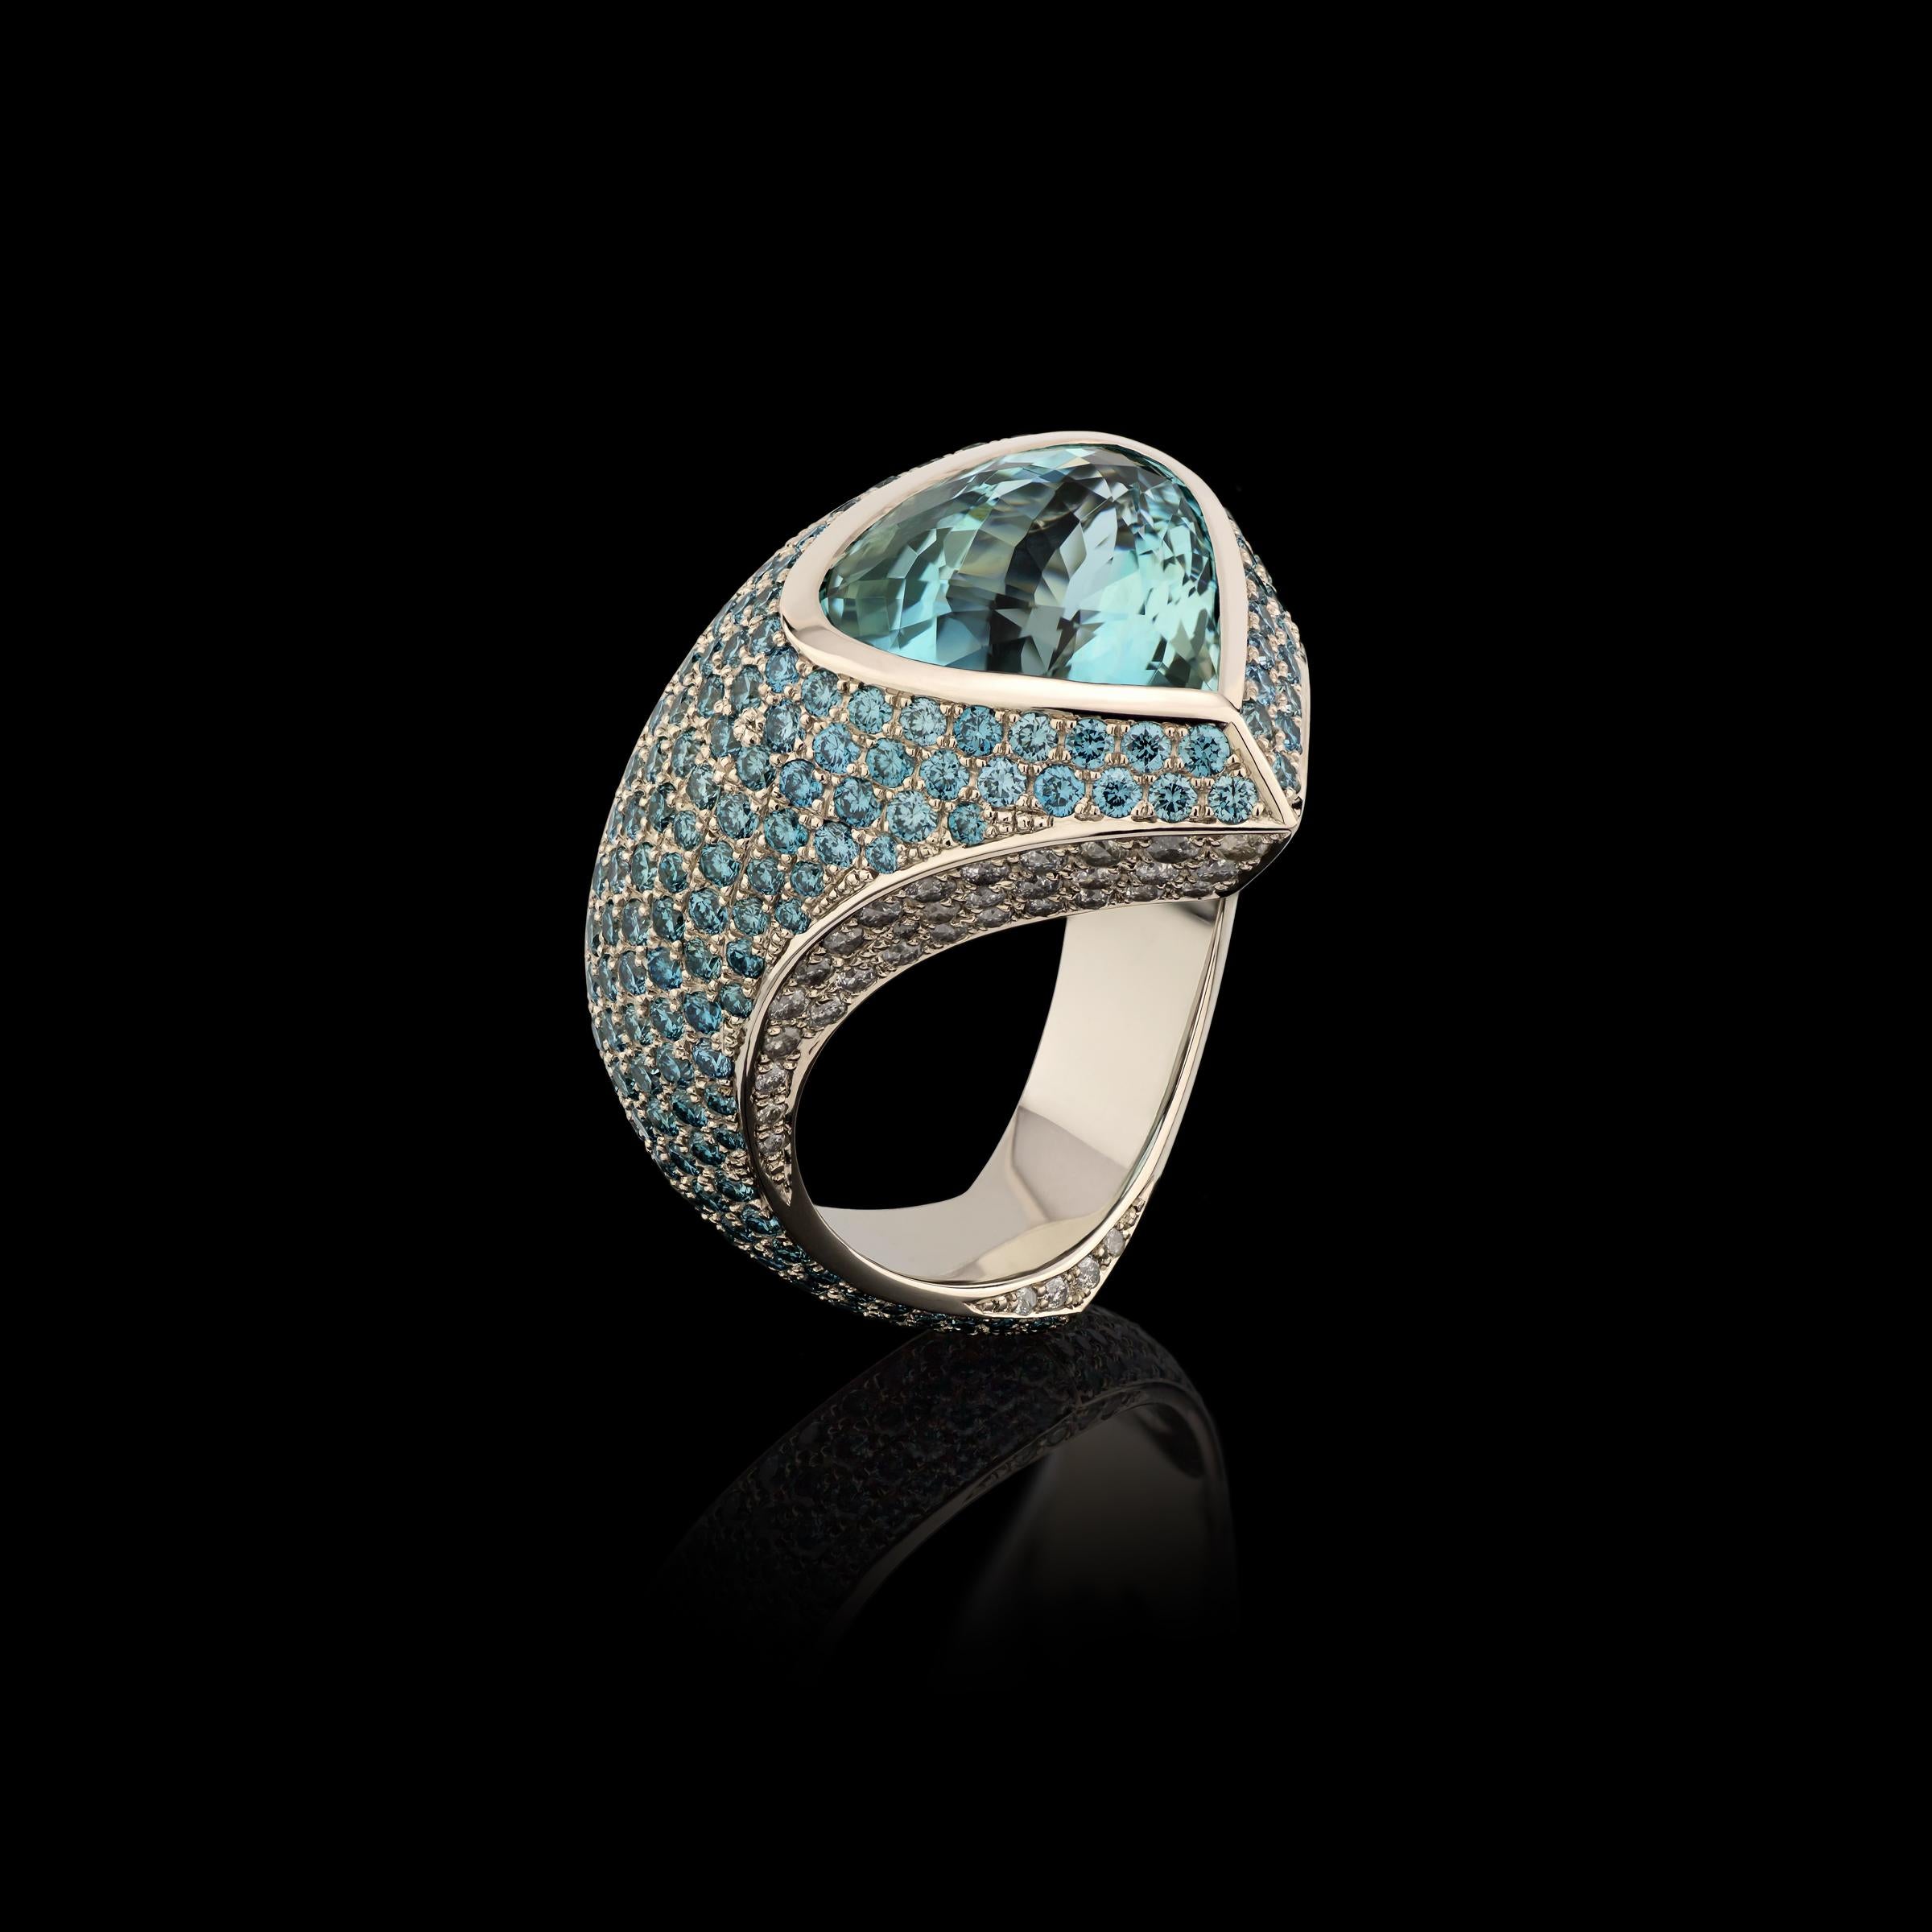 Modern Aquamarine Cocktail Ring 6.24ct Blue, 18k White Gold, 357 hand set diamonds For Sale